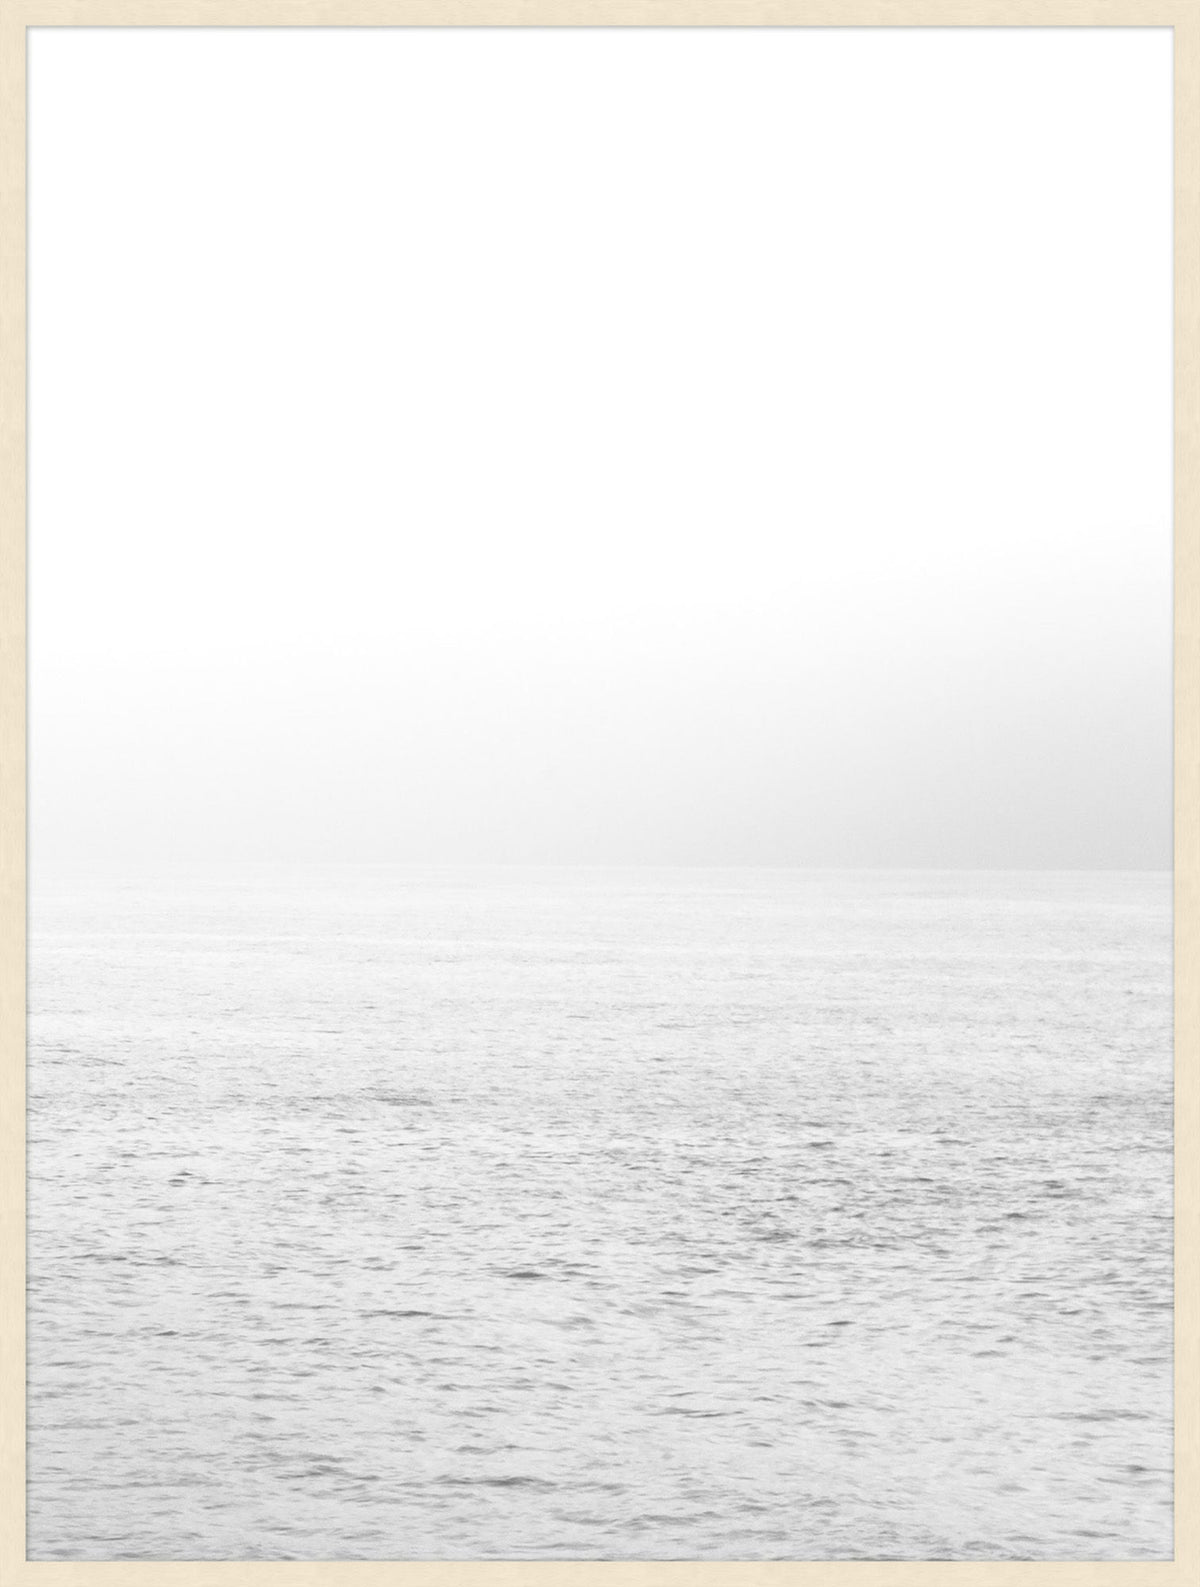 White Seas 2 by Lillian August Photograph Artwork Pickled White Frame - 46.5 x 61.5